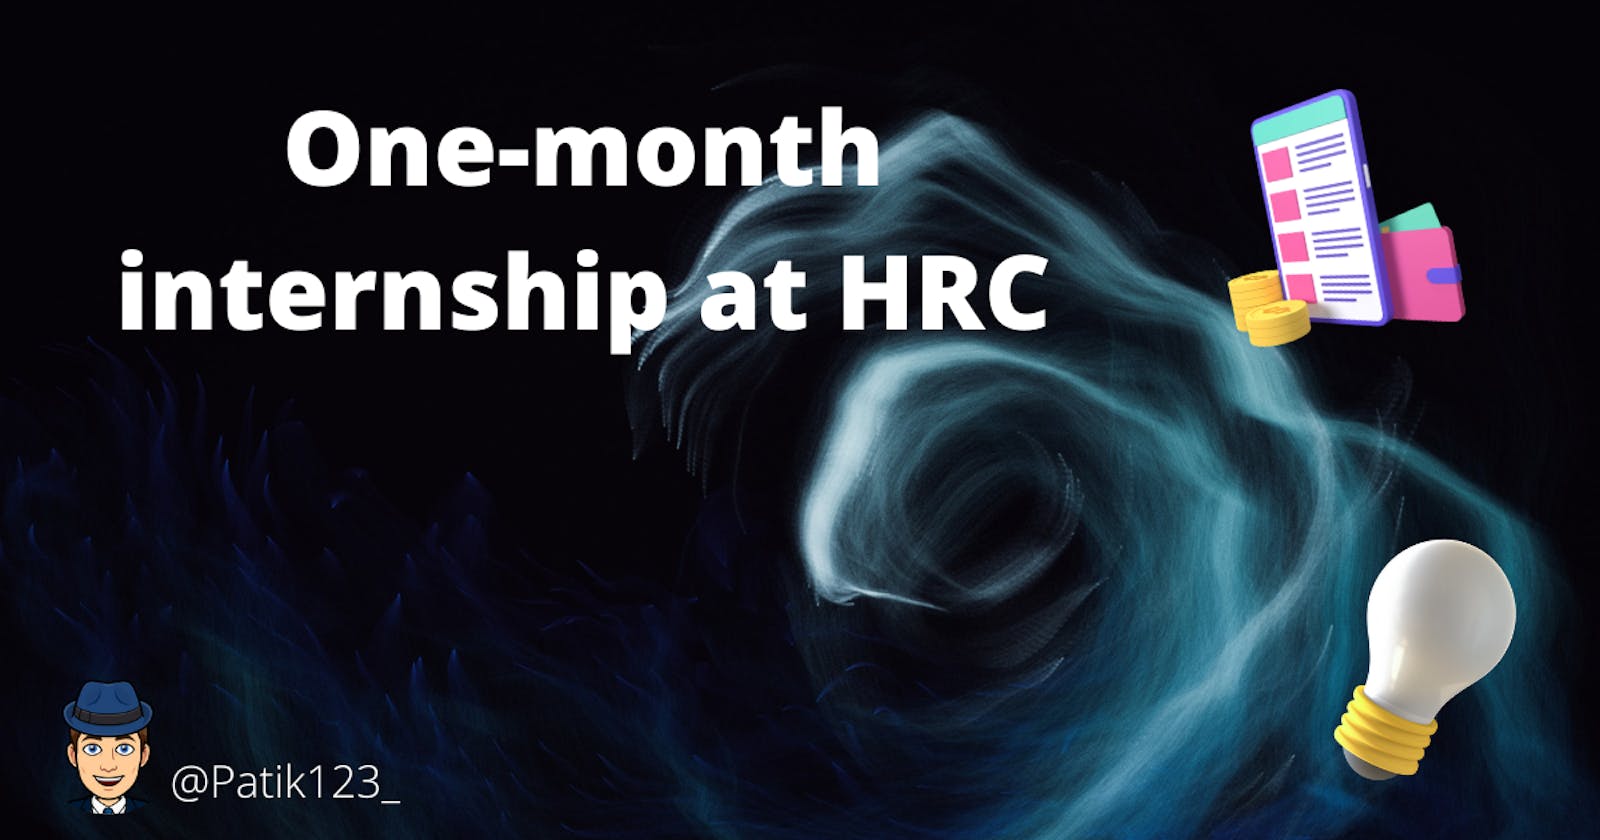 One-month internship at HRC